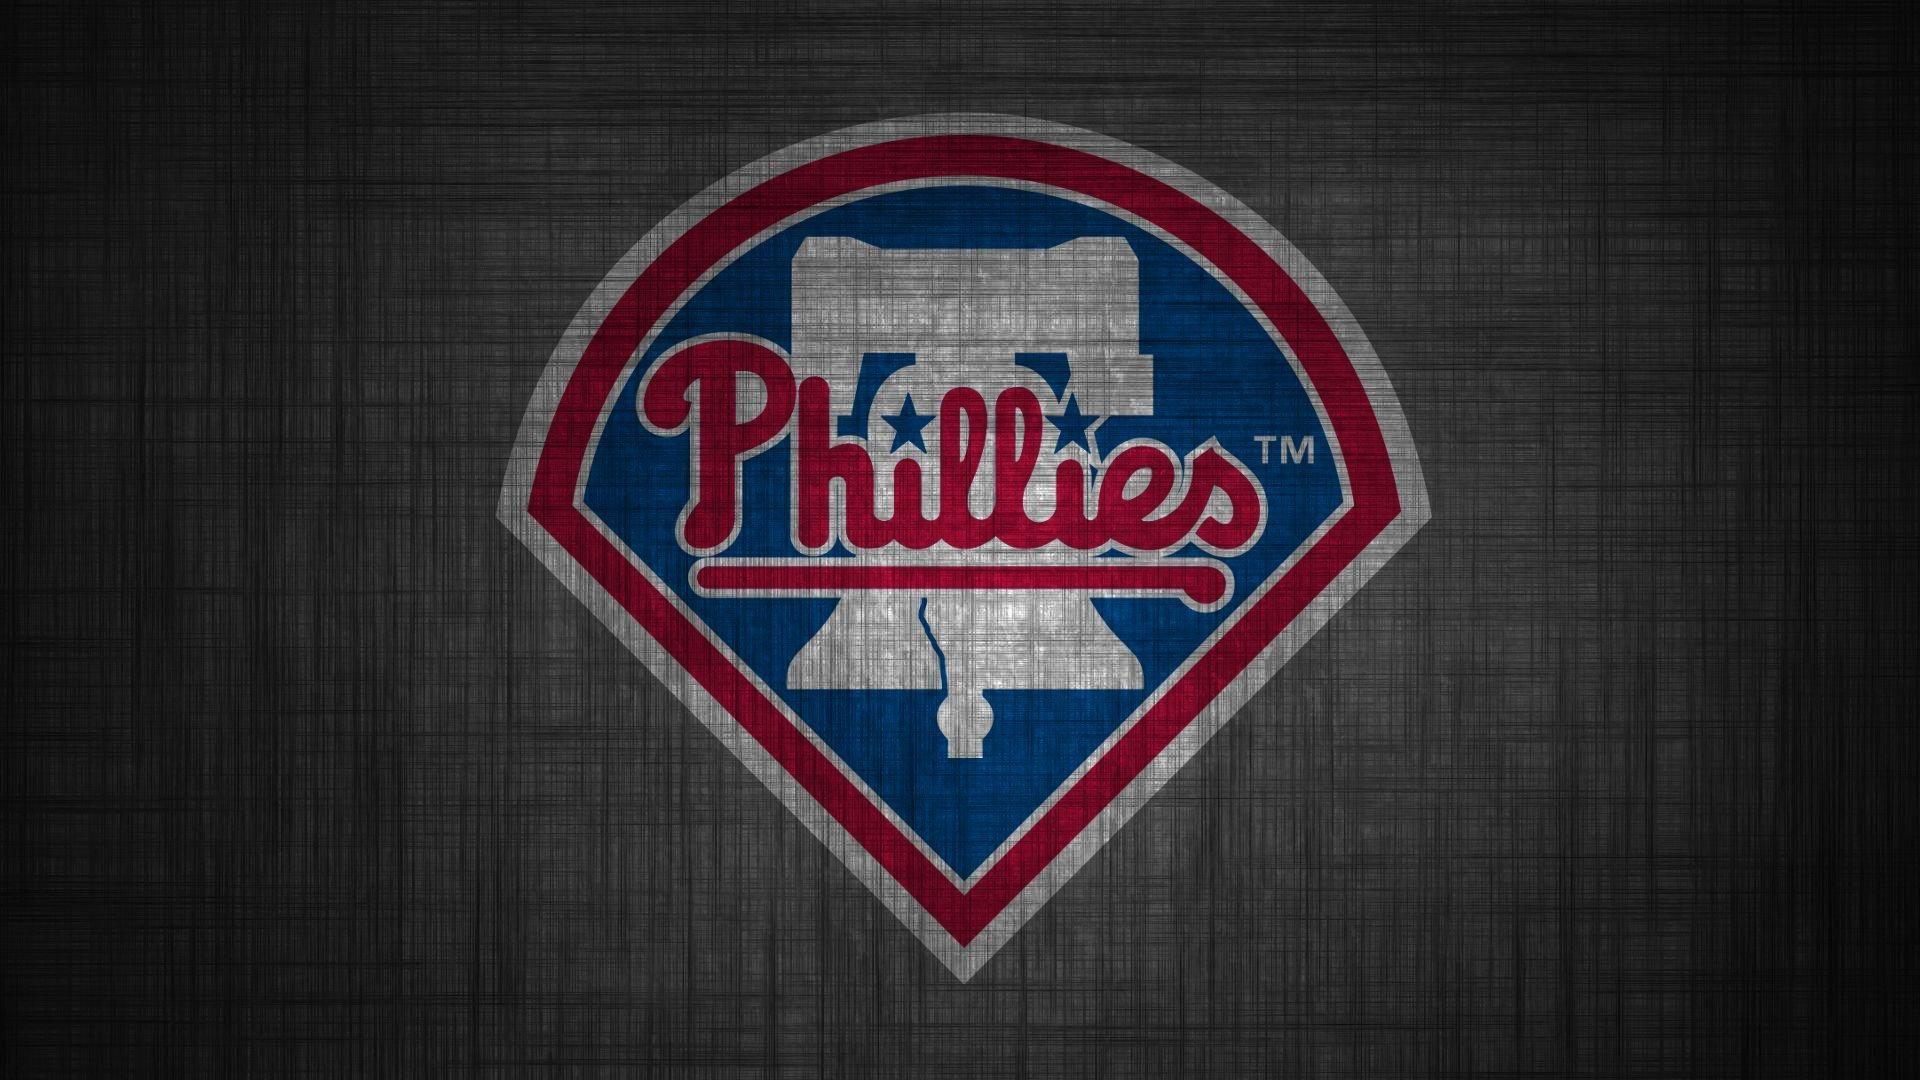 2023 Philadelphia Phillies wallpaper – Pro Sports Backgrounds